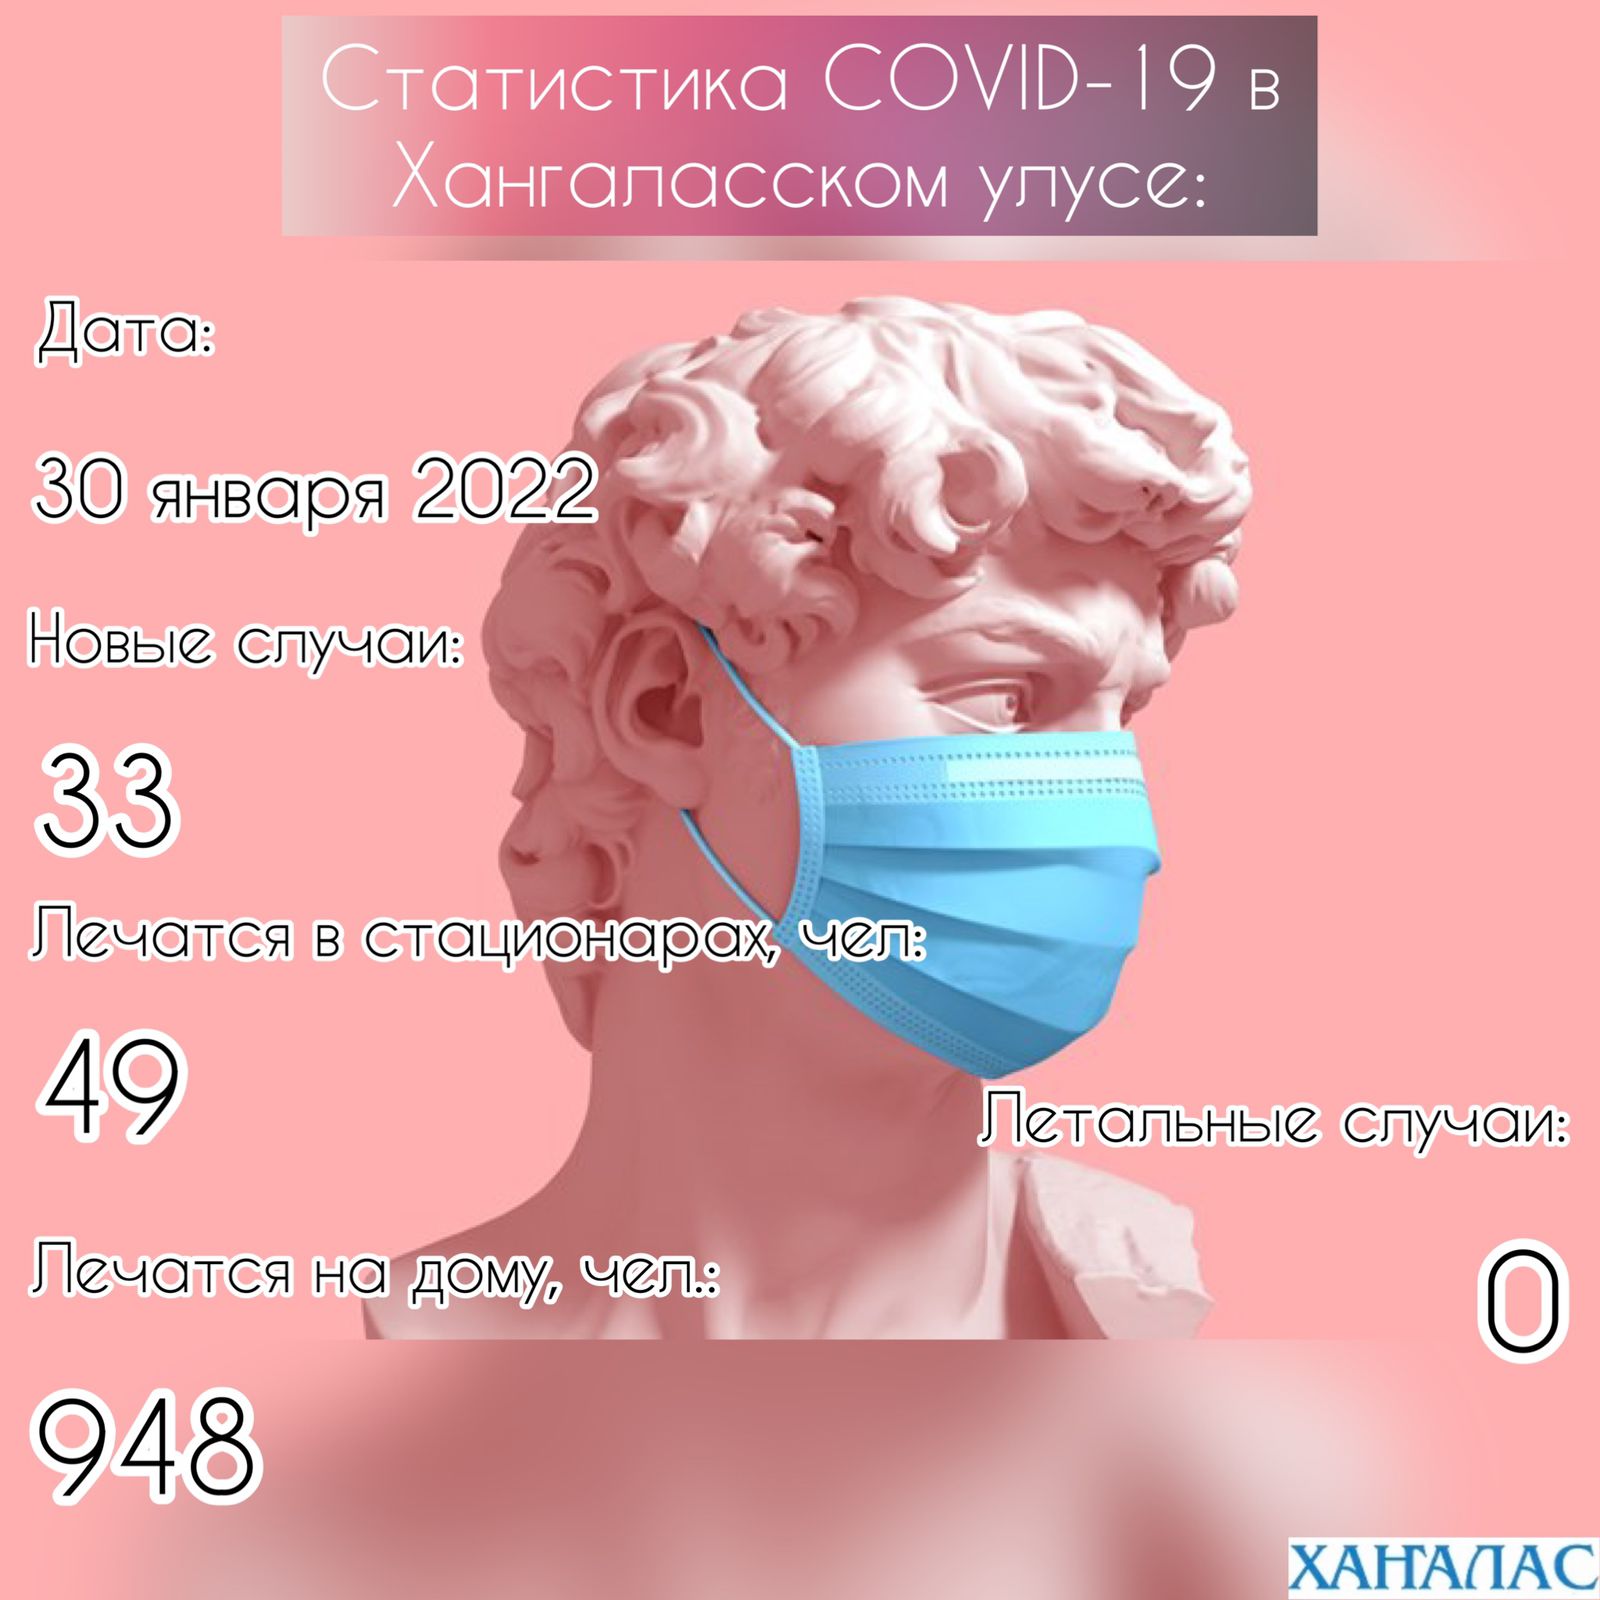 Немного о вакцинах против Covid-19